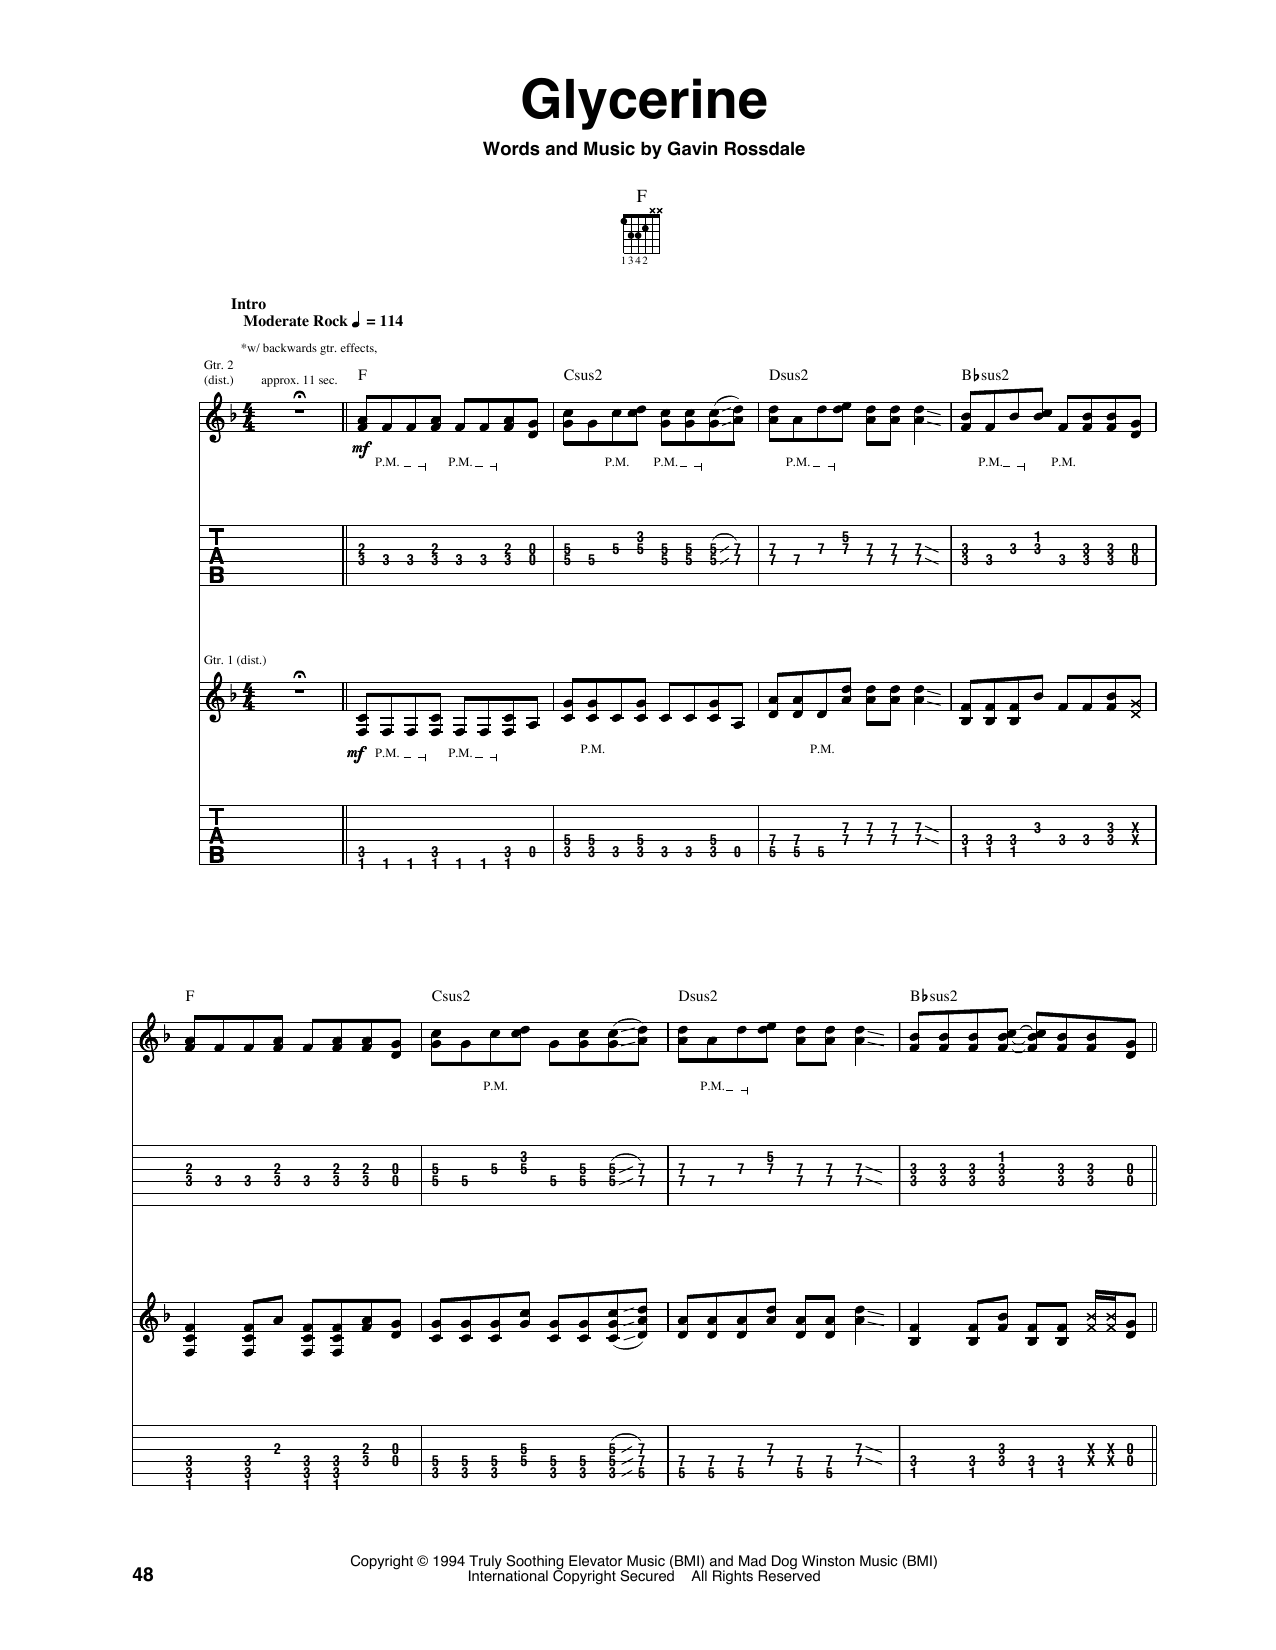 Bush Glycerine Sheet Music Notes & Chords for Guitar Tab - Download or Print PDF